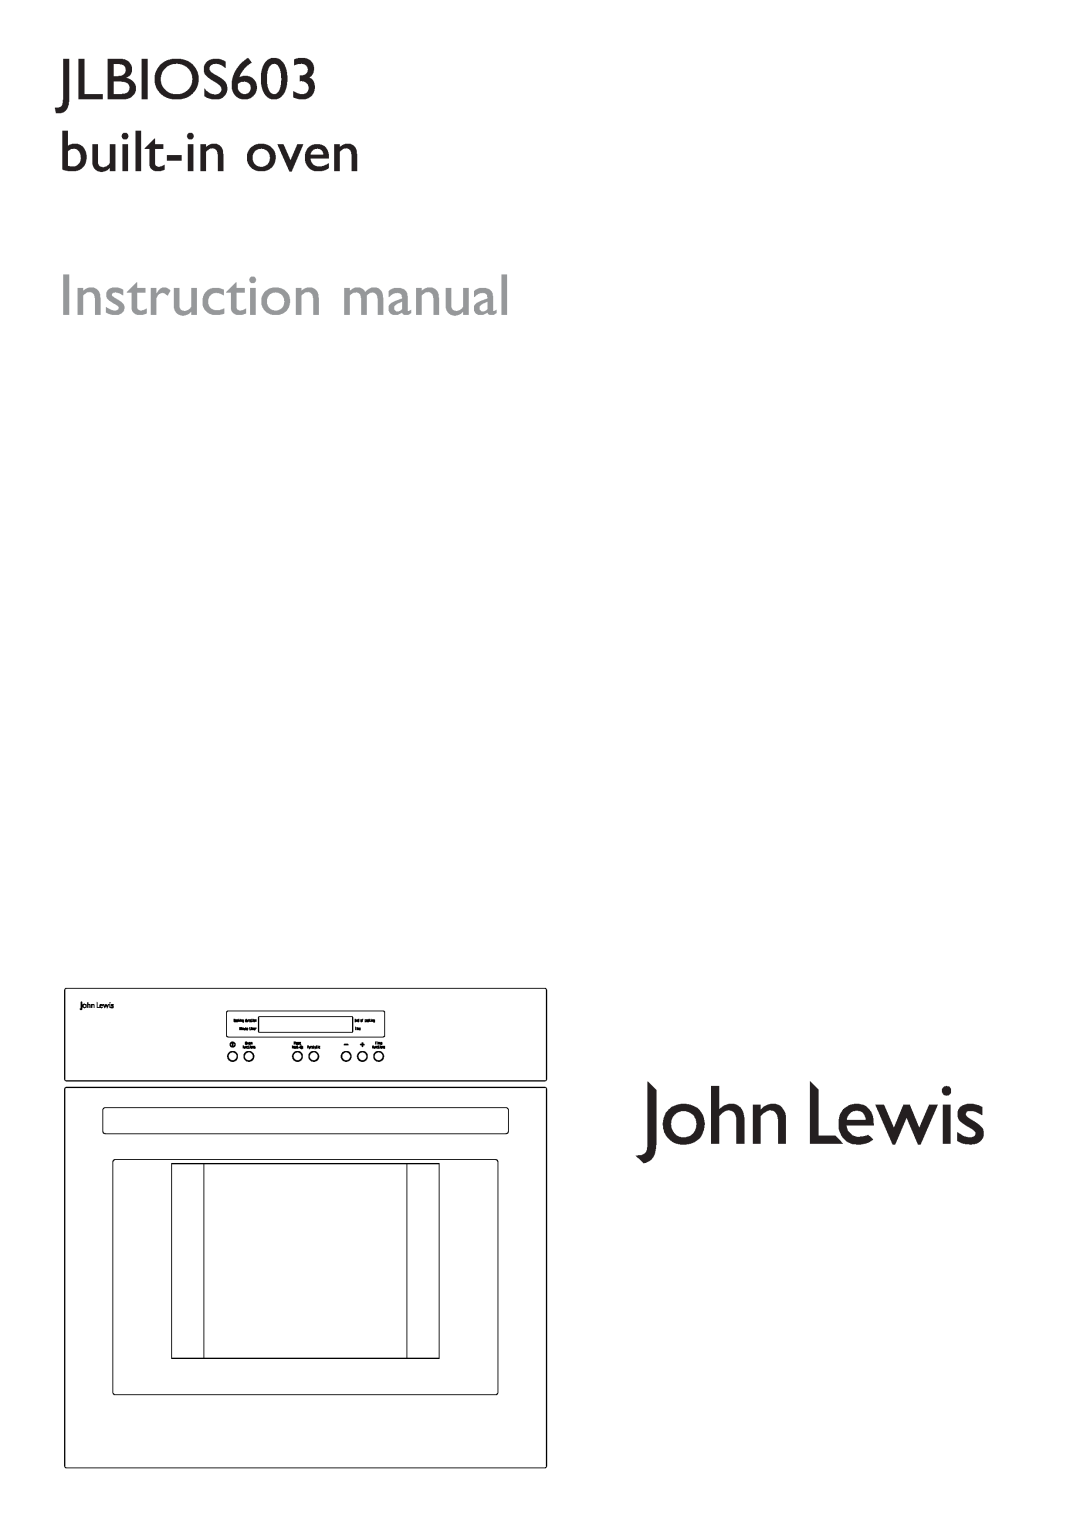 John Lewis instruction manual JLBIOS603 built-inoven 